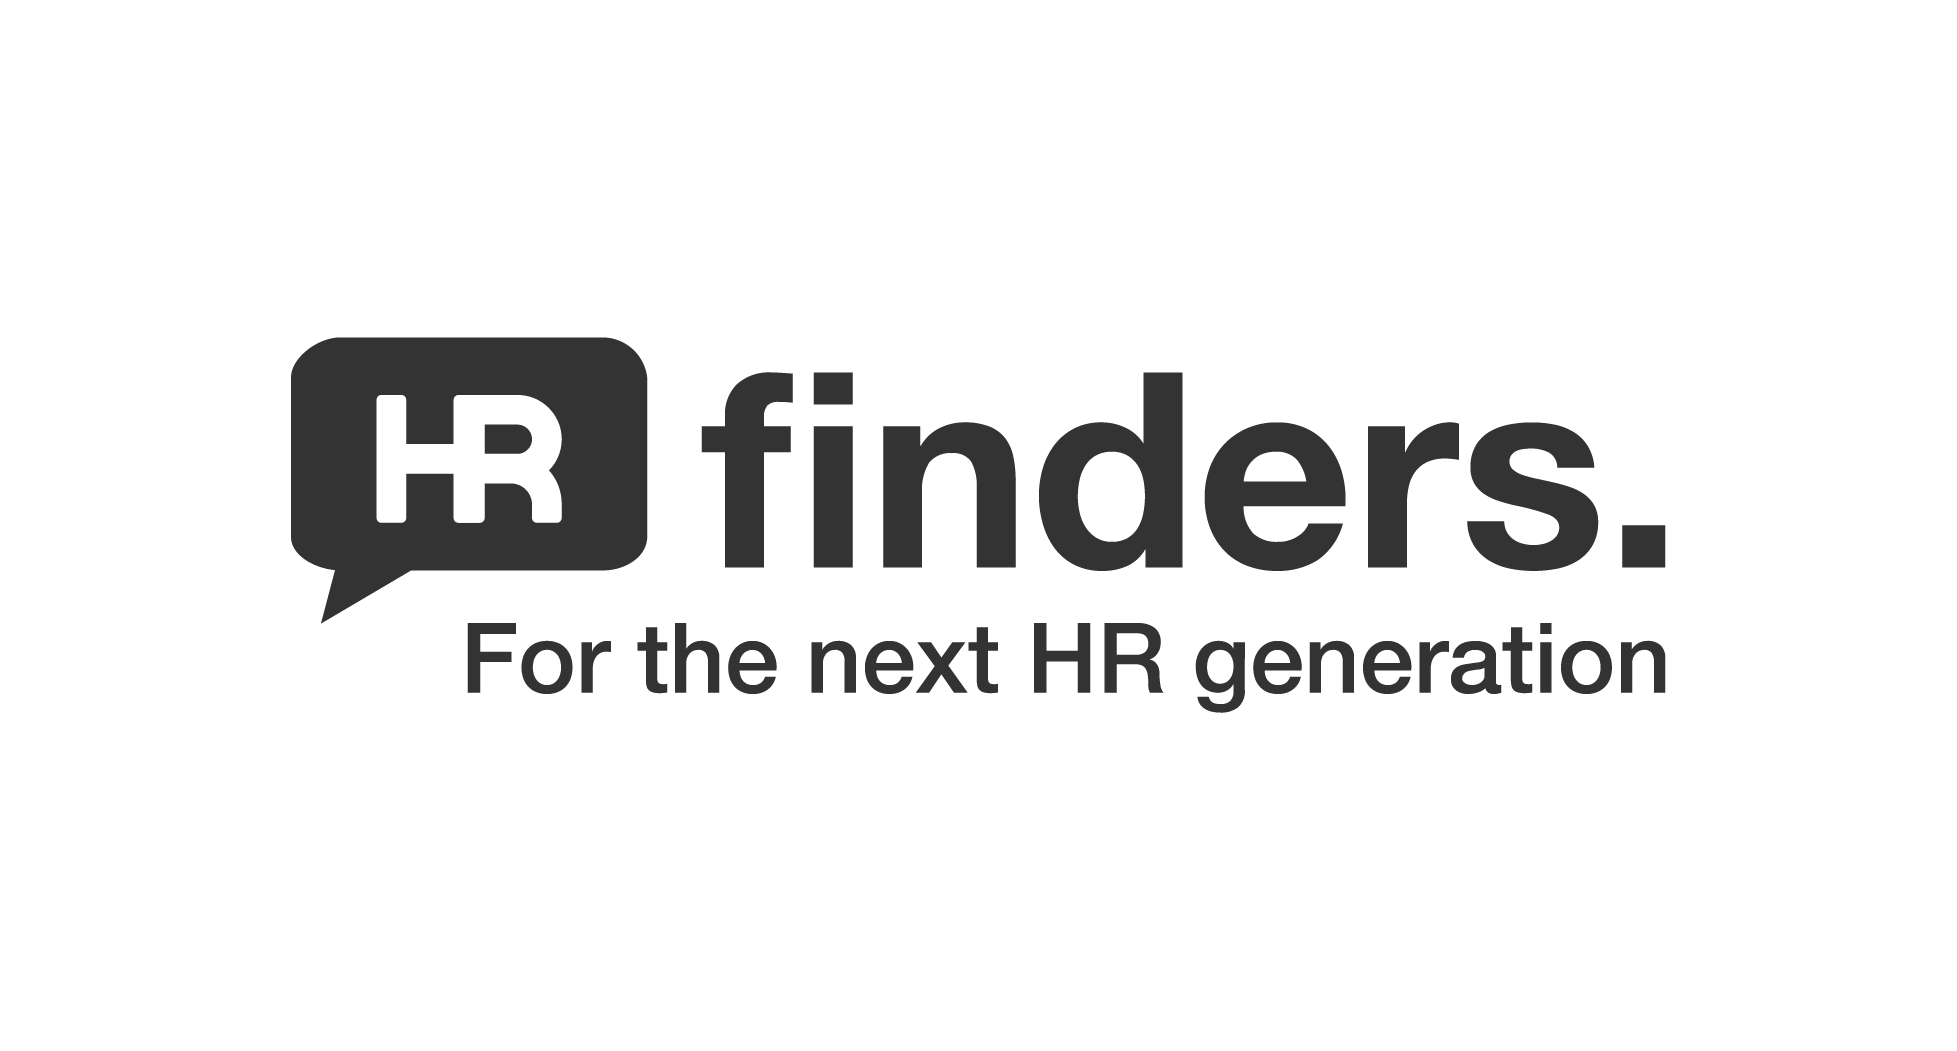 HR Finders